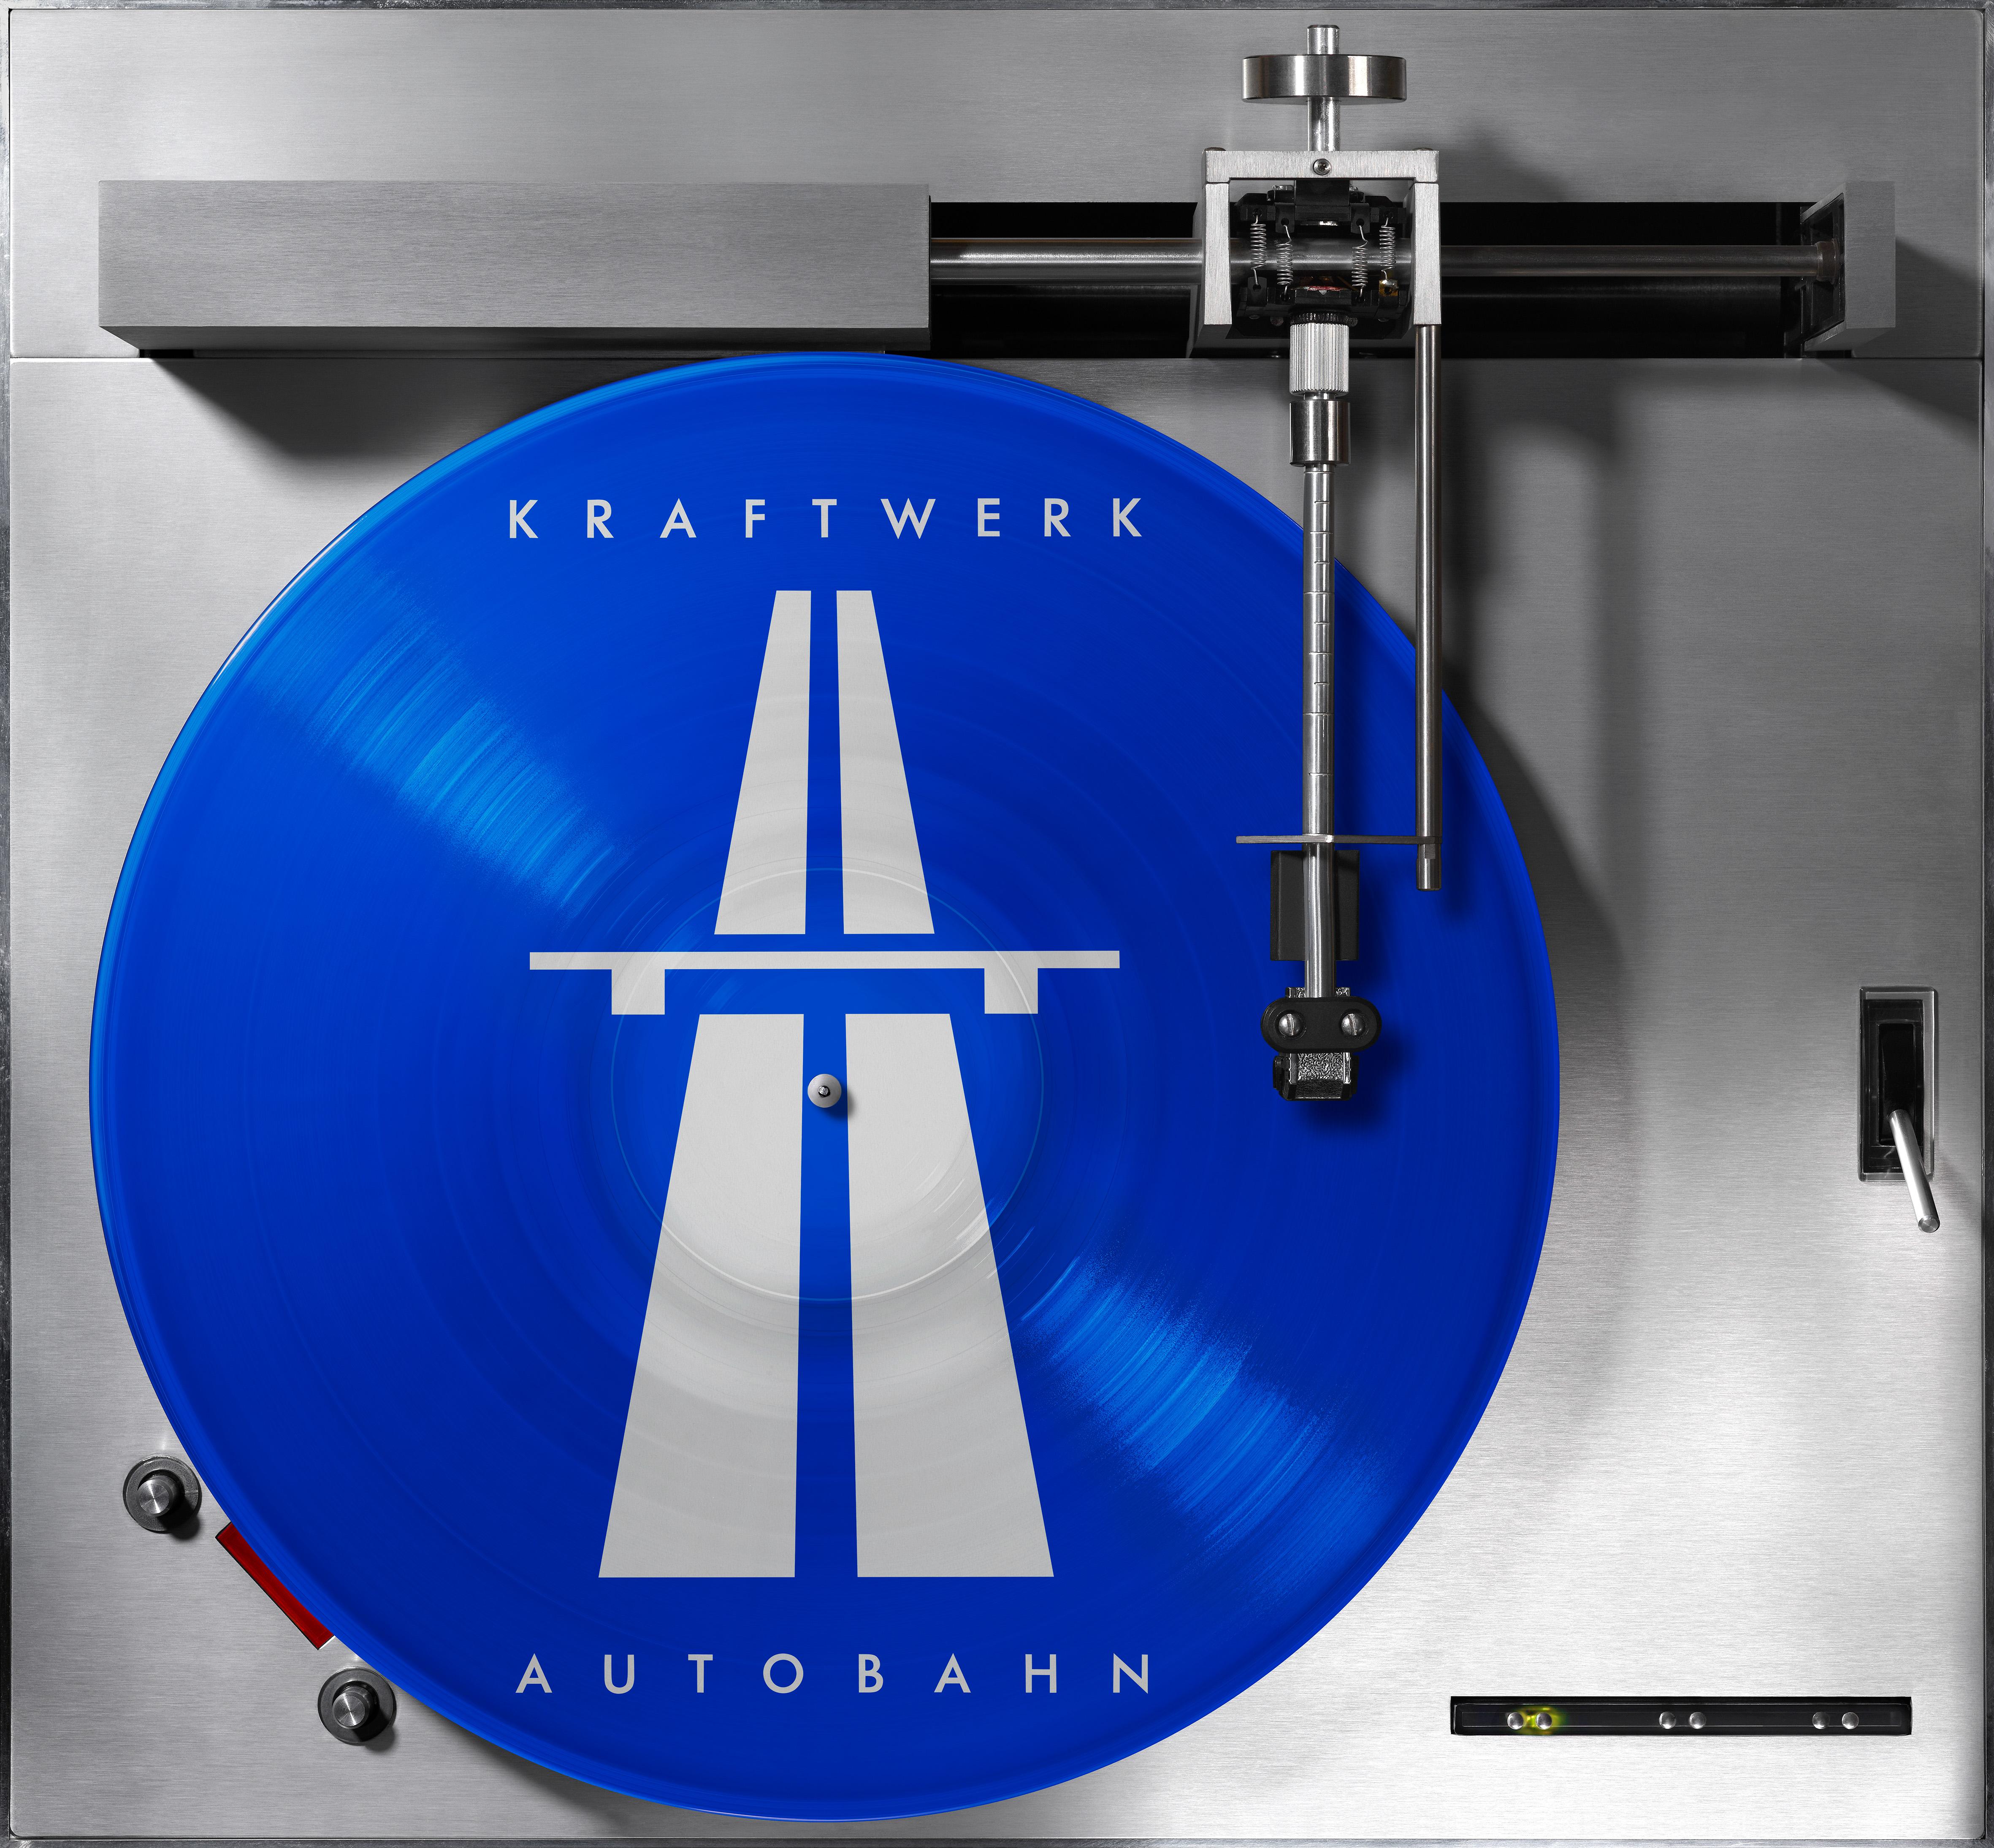 Harman Kardon, Kraftwerk – Autobahn 2, Weltrekorde (Fotografie)